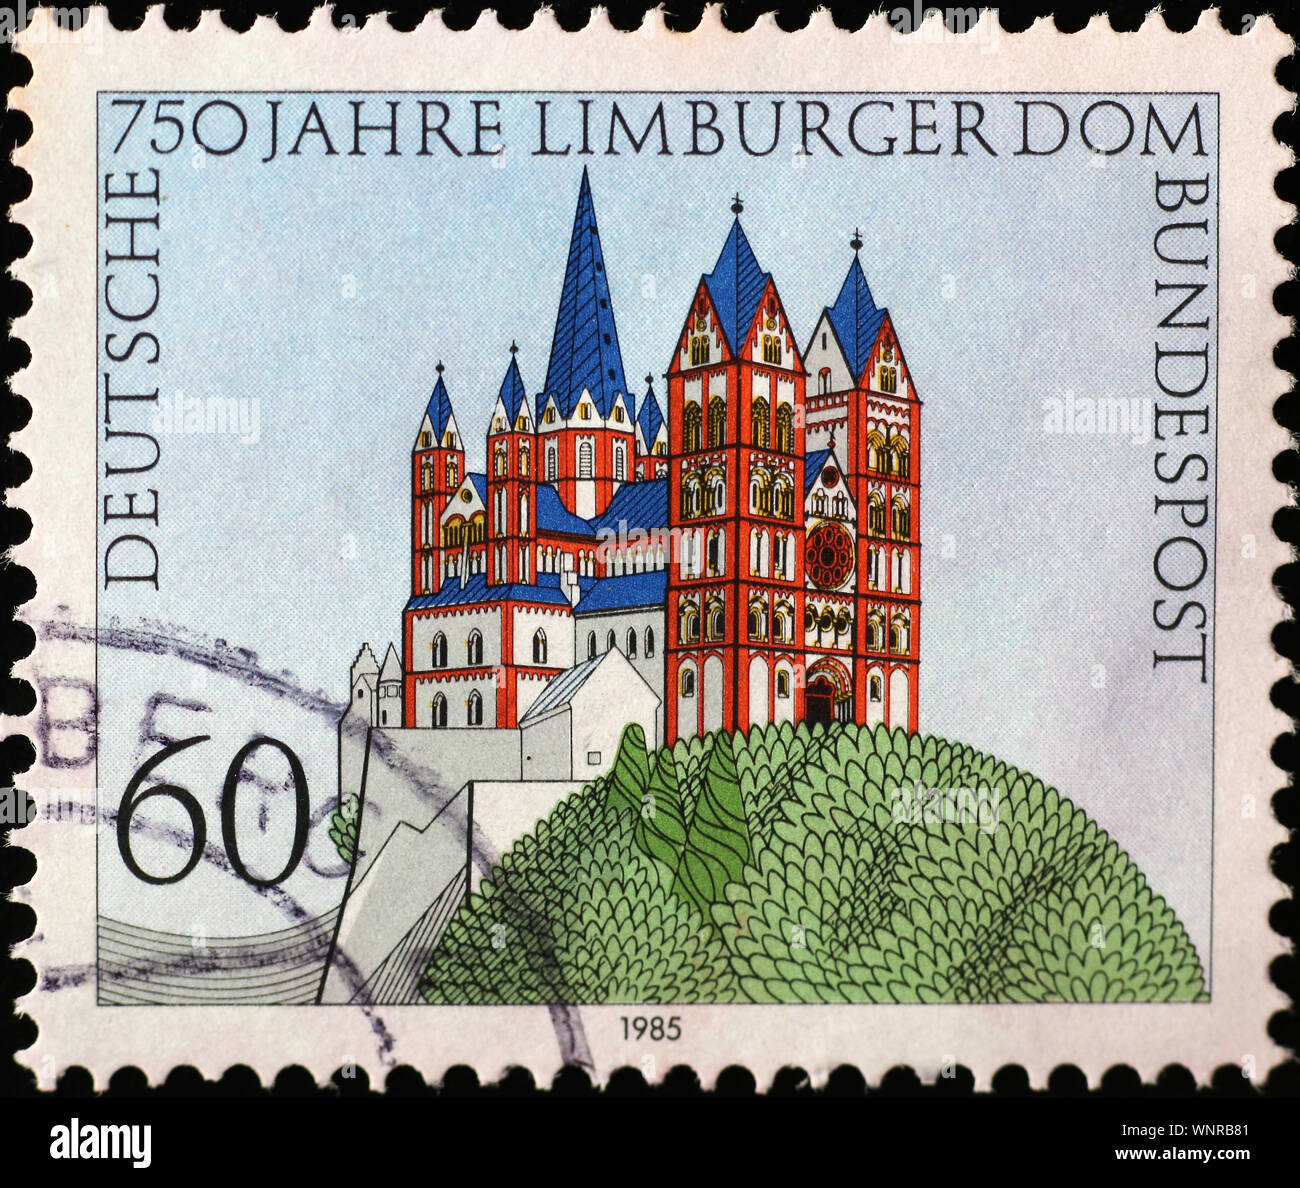 Limburg Cathedral on german postage stamp Stock Photo